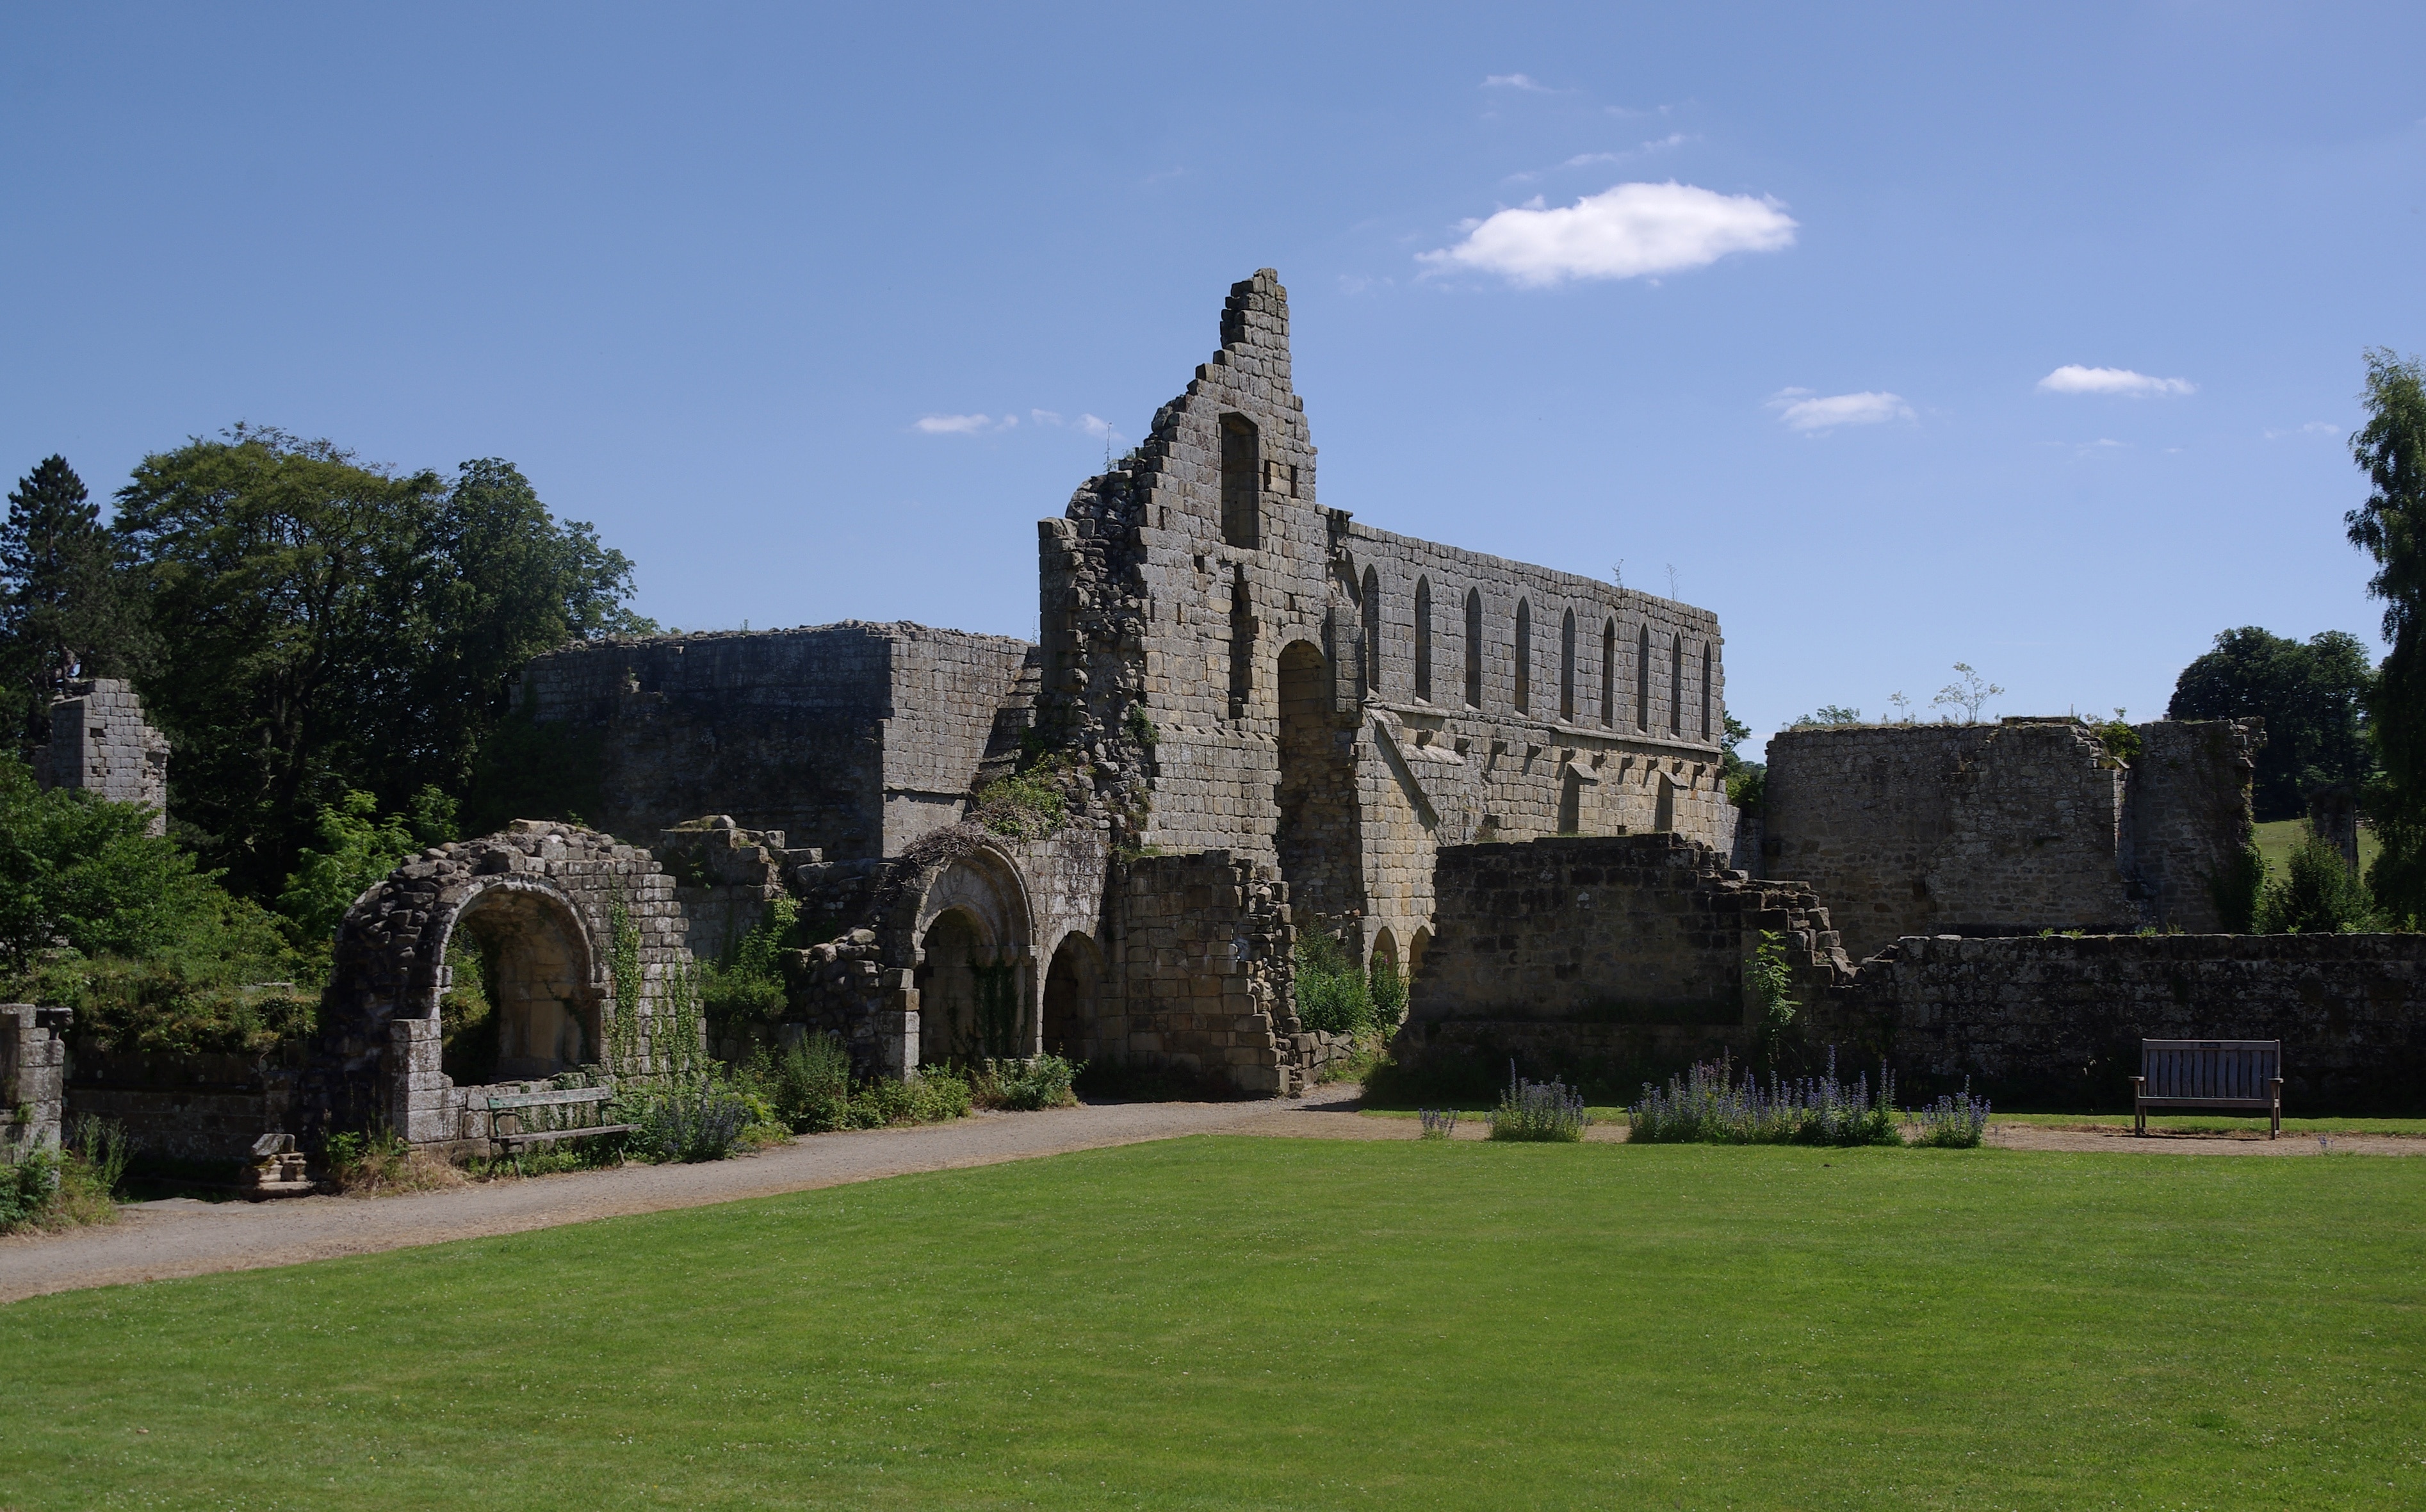 The cloister of Jervaulx Abbey.